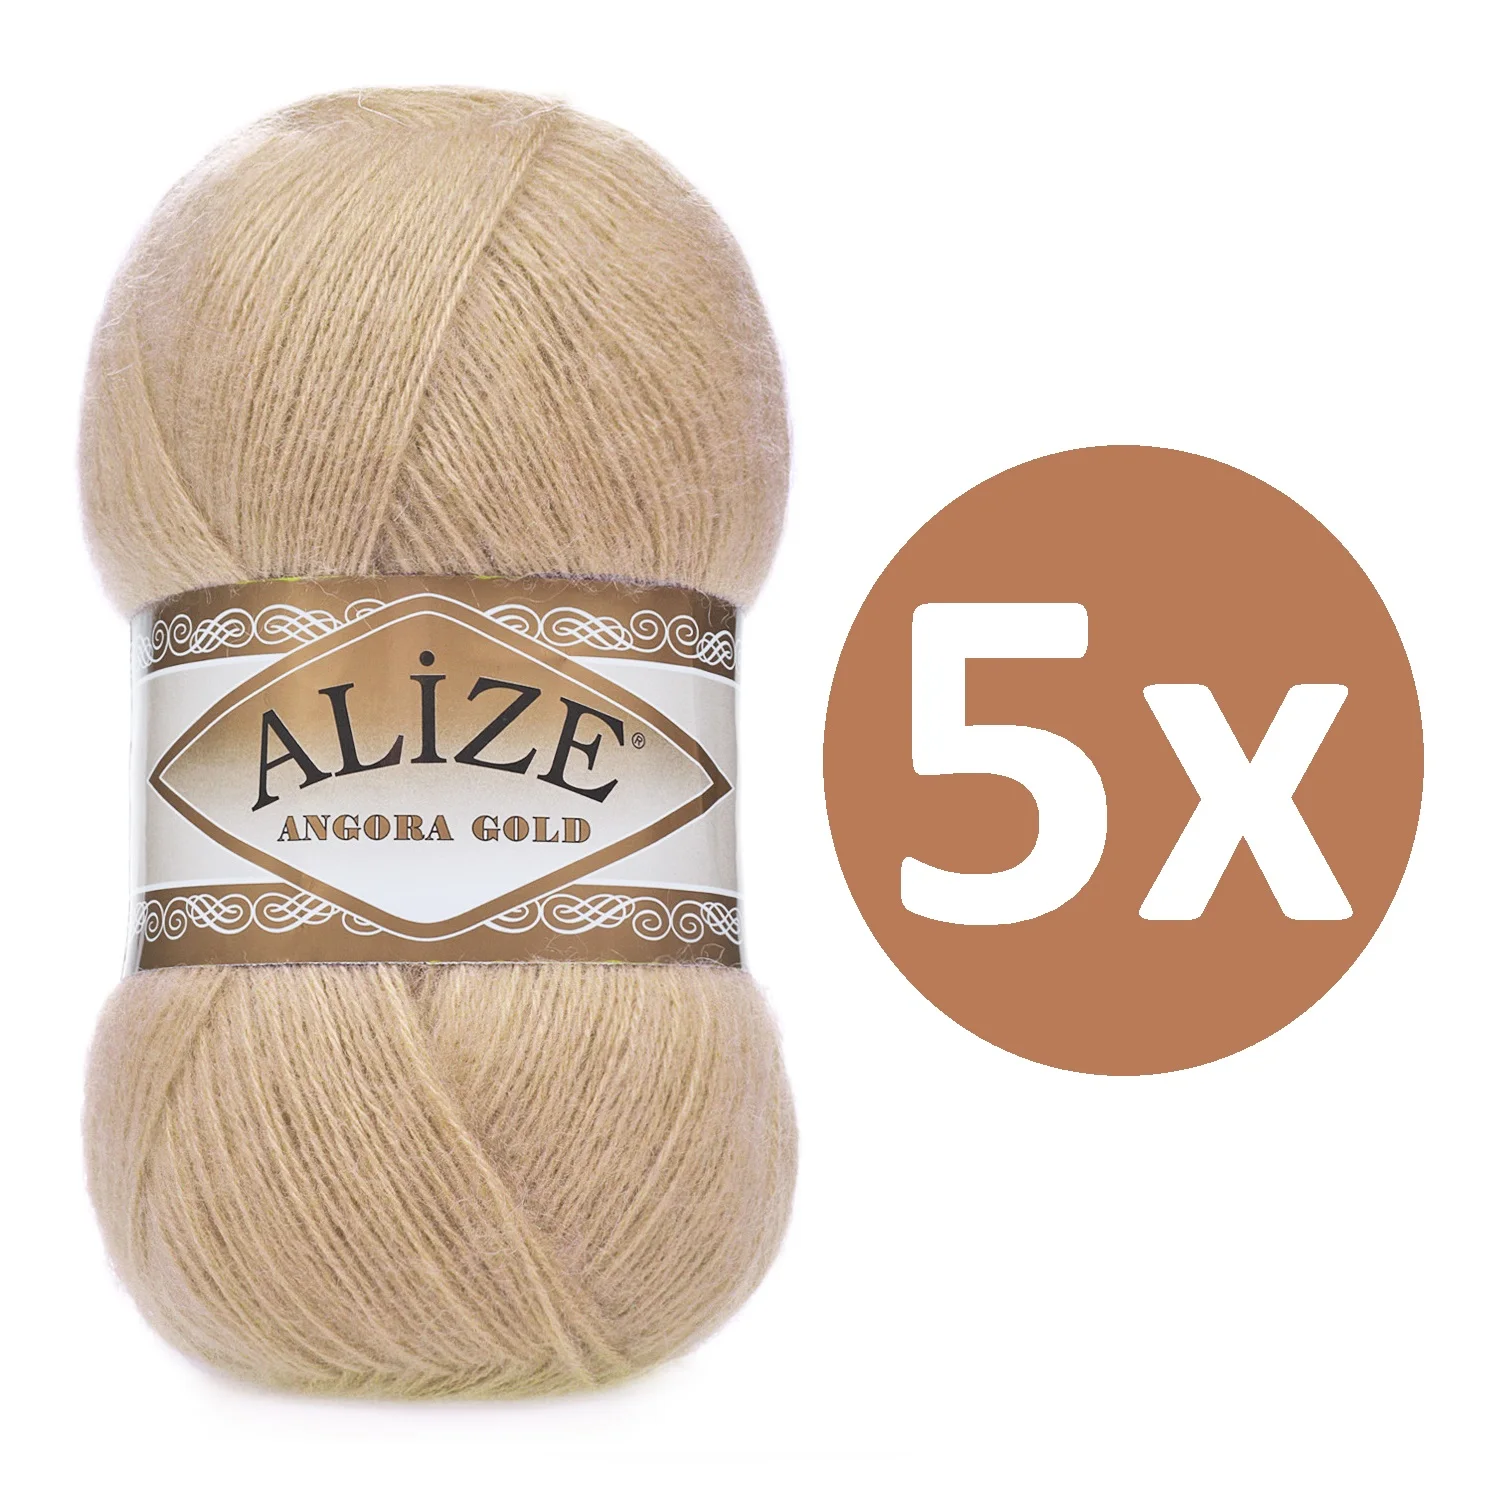 Alize Angora Gold Yarn - 5 Pieces Wool Knitting Crochet Thread Tweed Mohair Mink Merino Wrap Beanie Shawl Sweater Knitwear Hat